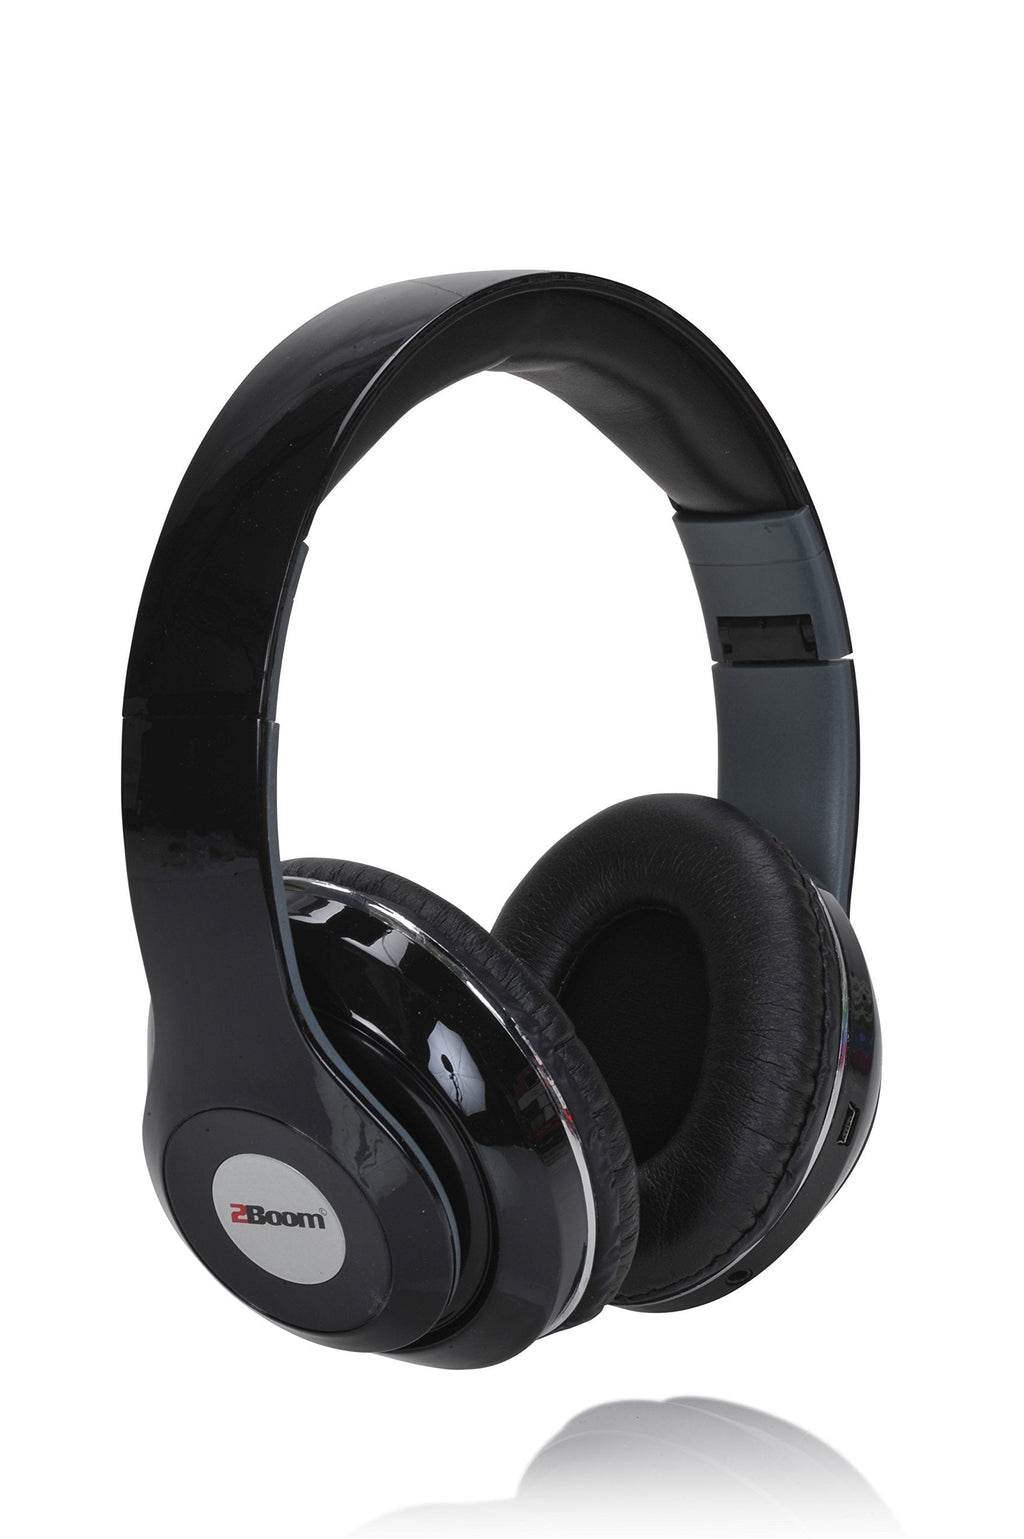 2BOOM MIXX Professional Over Ear Studio Foldable Digital Stereo Bass Wired Headphone Black MGRHPM380K